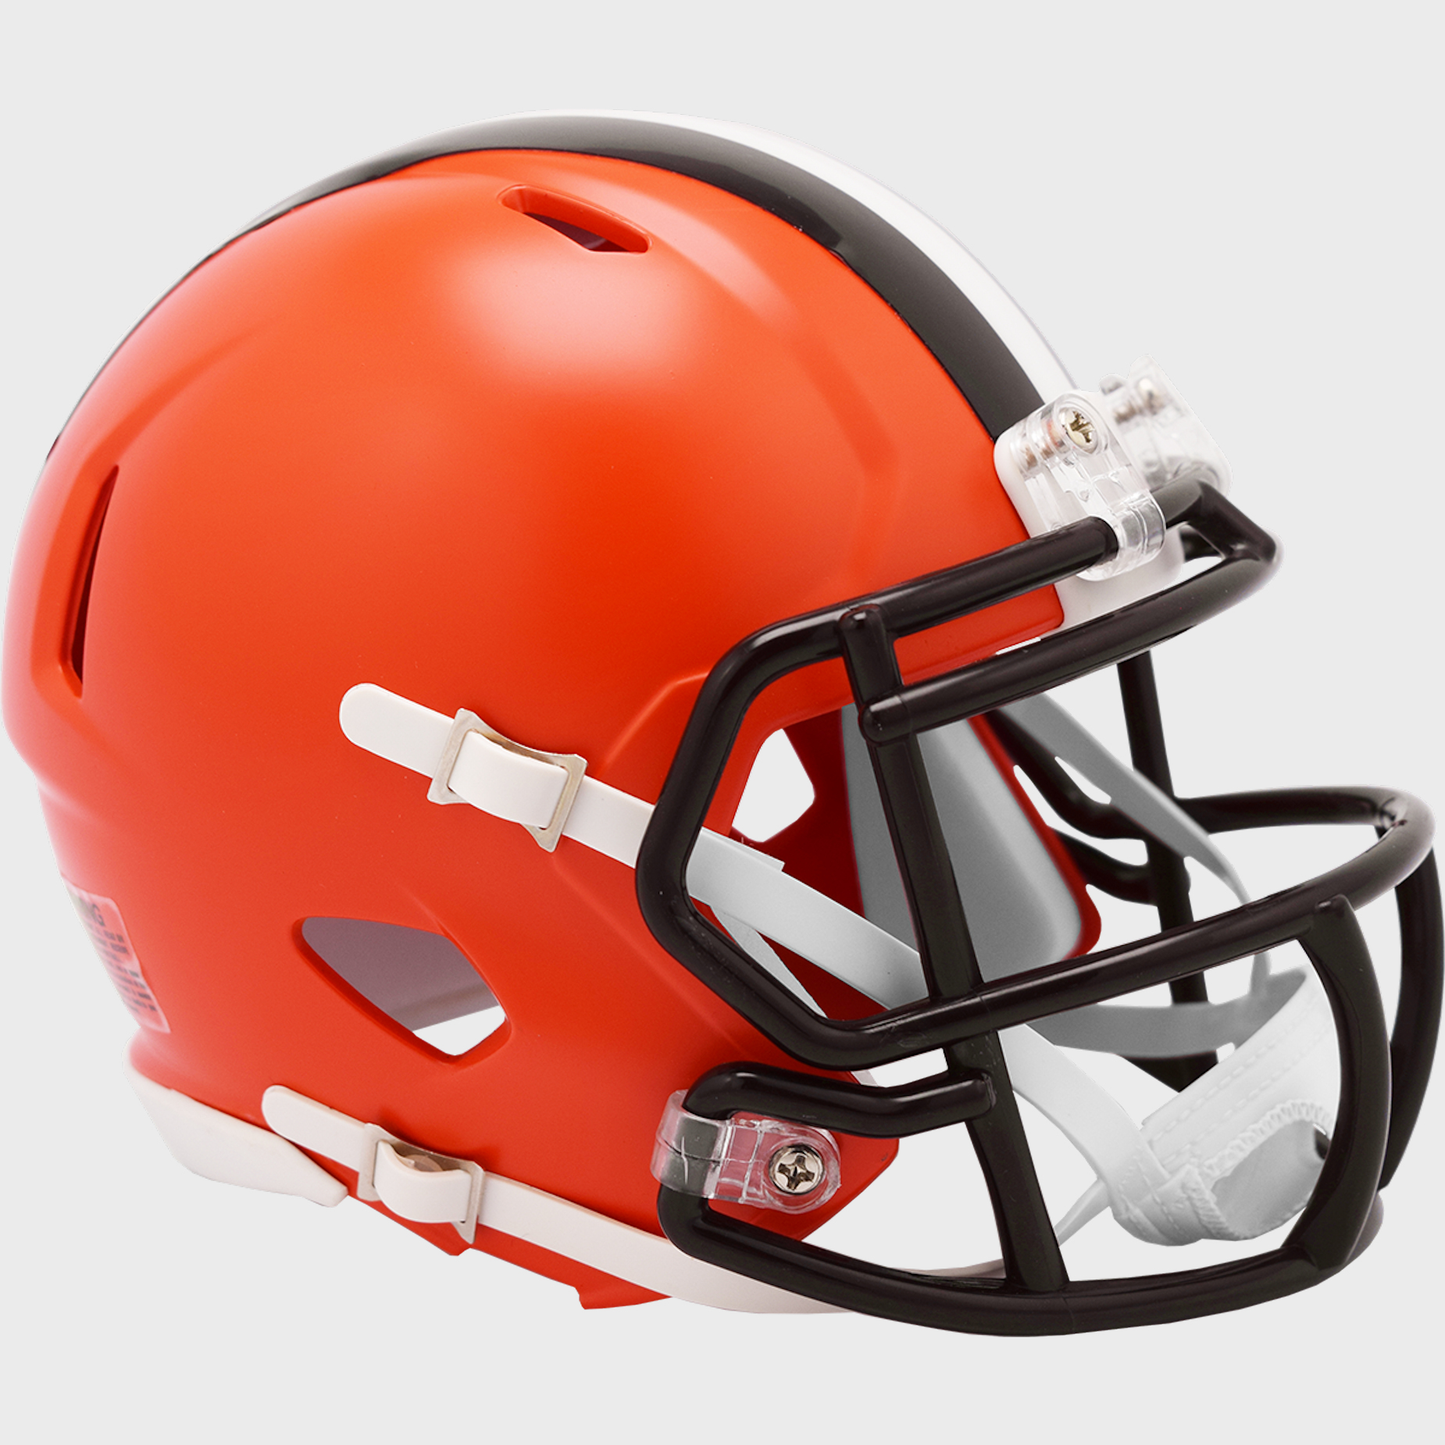 Cleveland Browns mini helmet